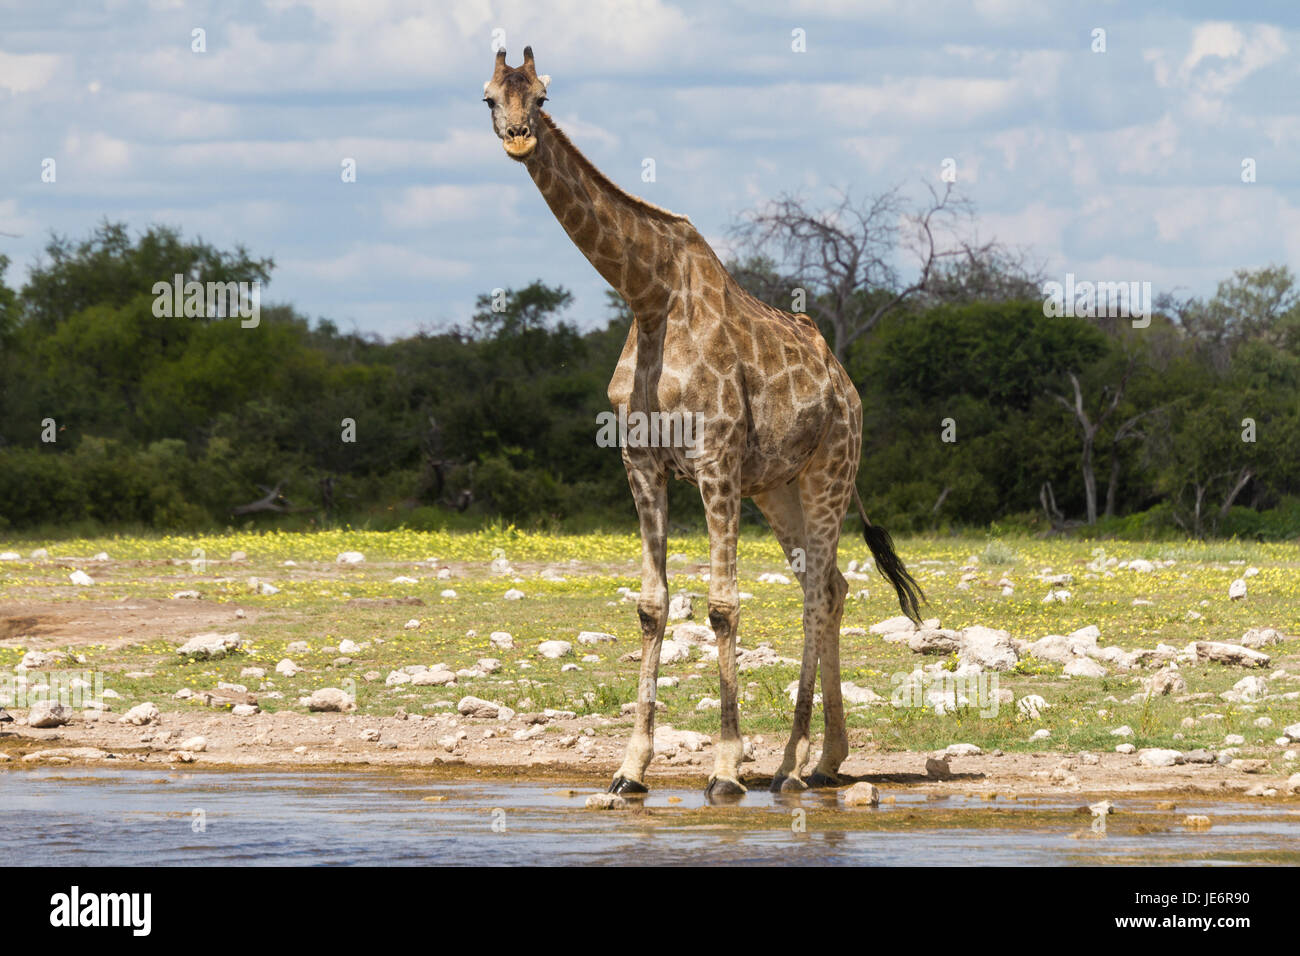 Giraffe drinking at a water hole, Etosha National Park, Namibia Stock Photo